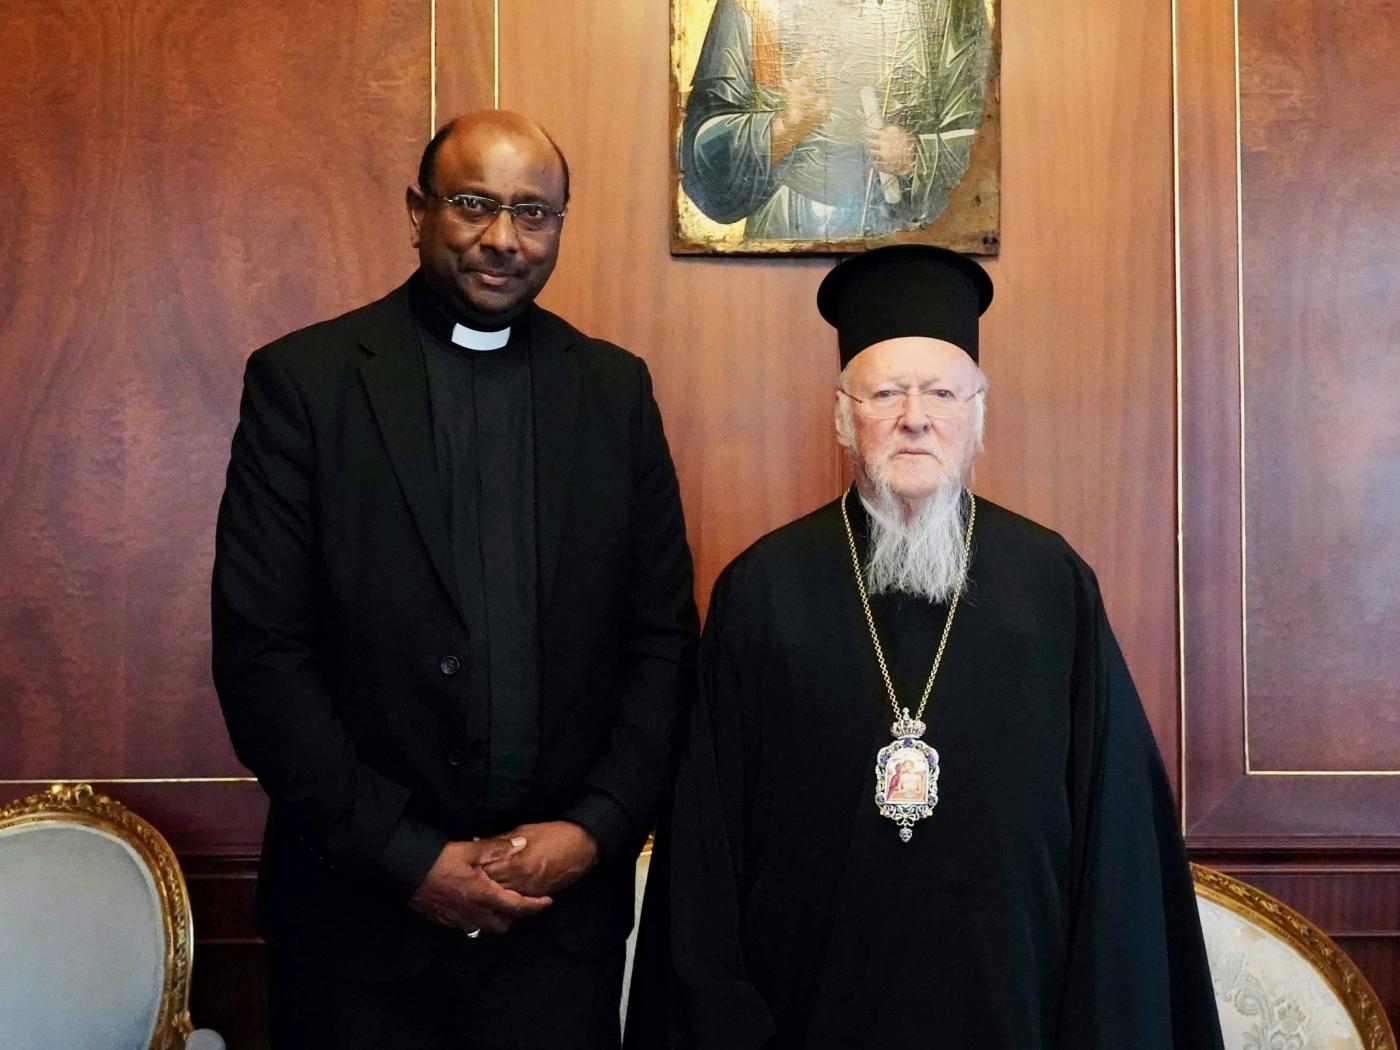 WCC general secretary visits Ecumenical Patriarchate